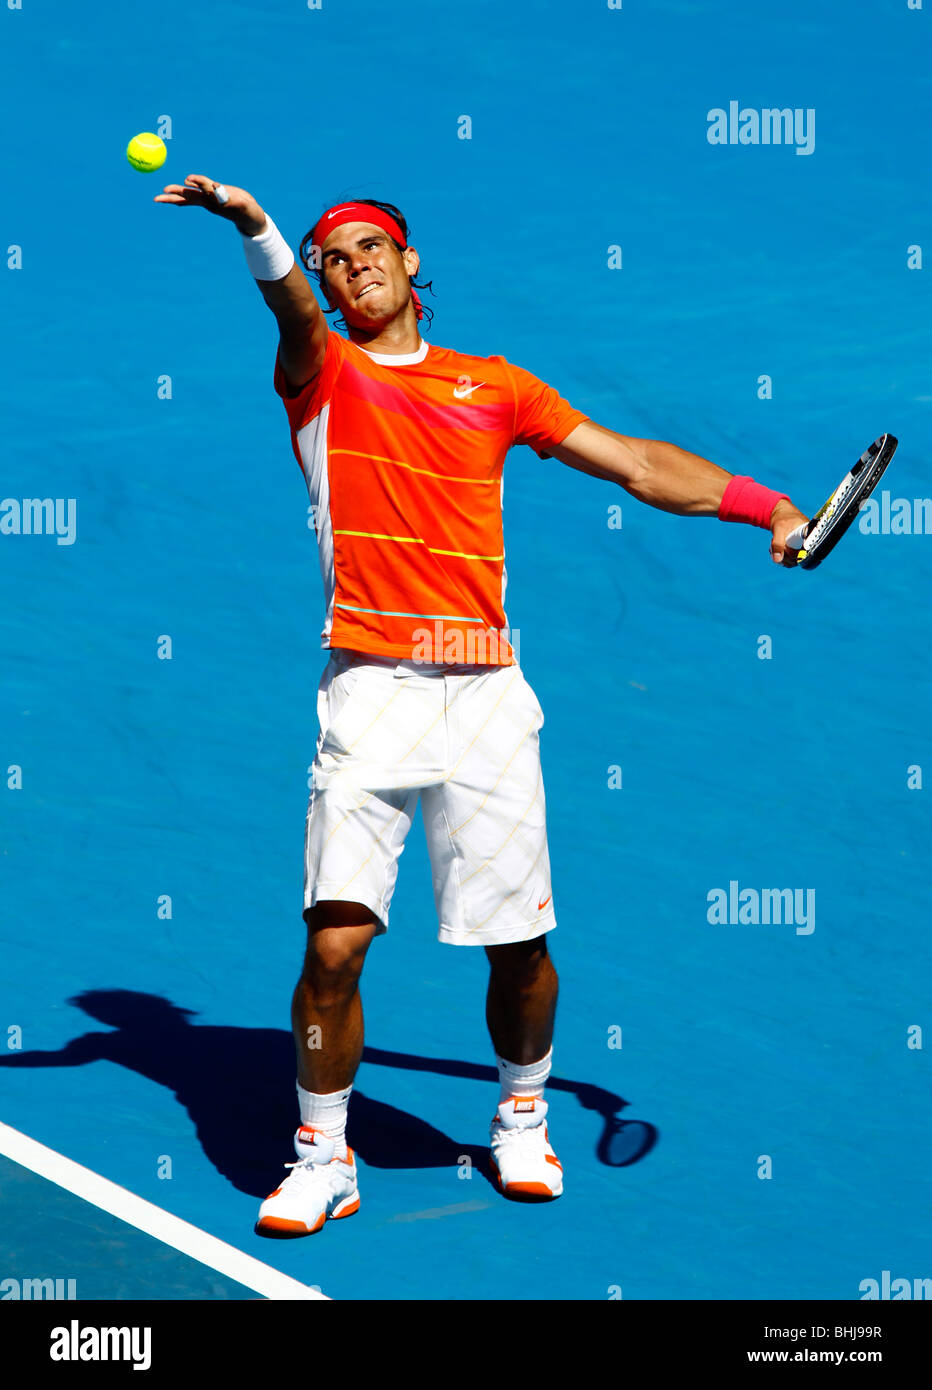 Rafael Nadal of Spain at the Australian Open 2010 in Melbourne, Australia  Stock Photo - Alamy